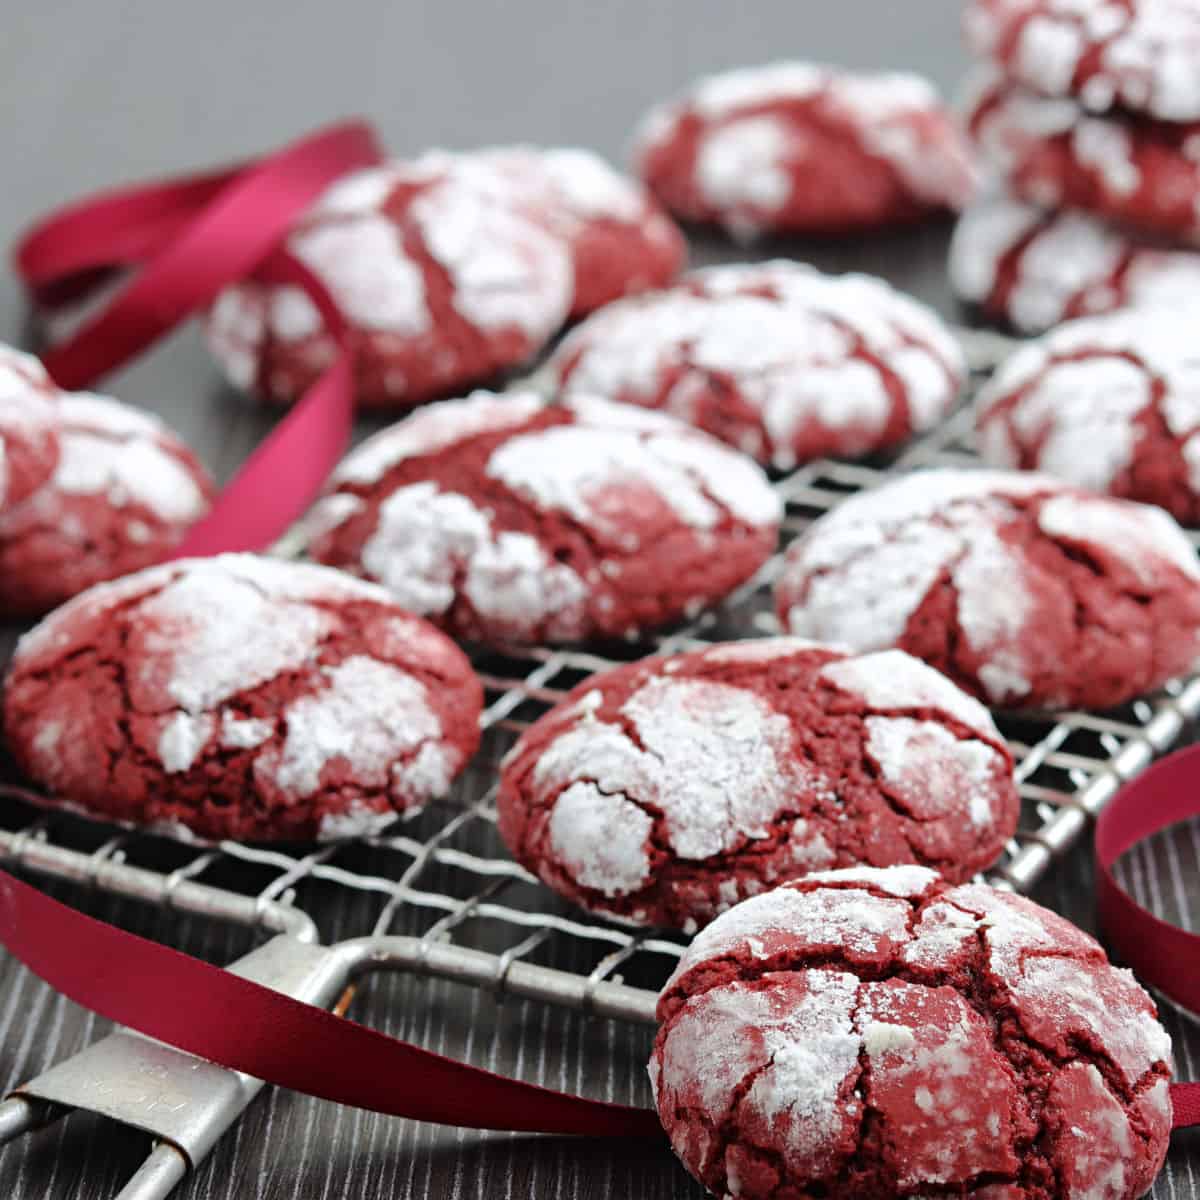 Red velvet crinkle cookies on a wire rack.